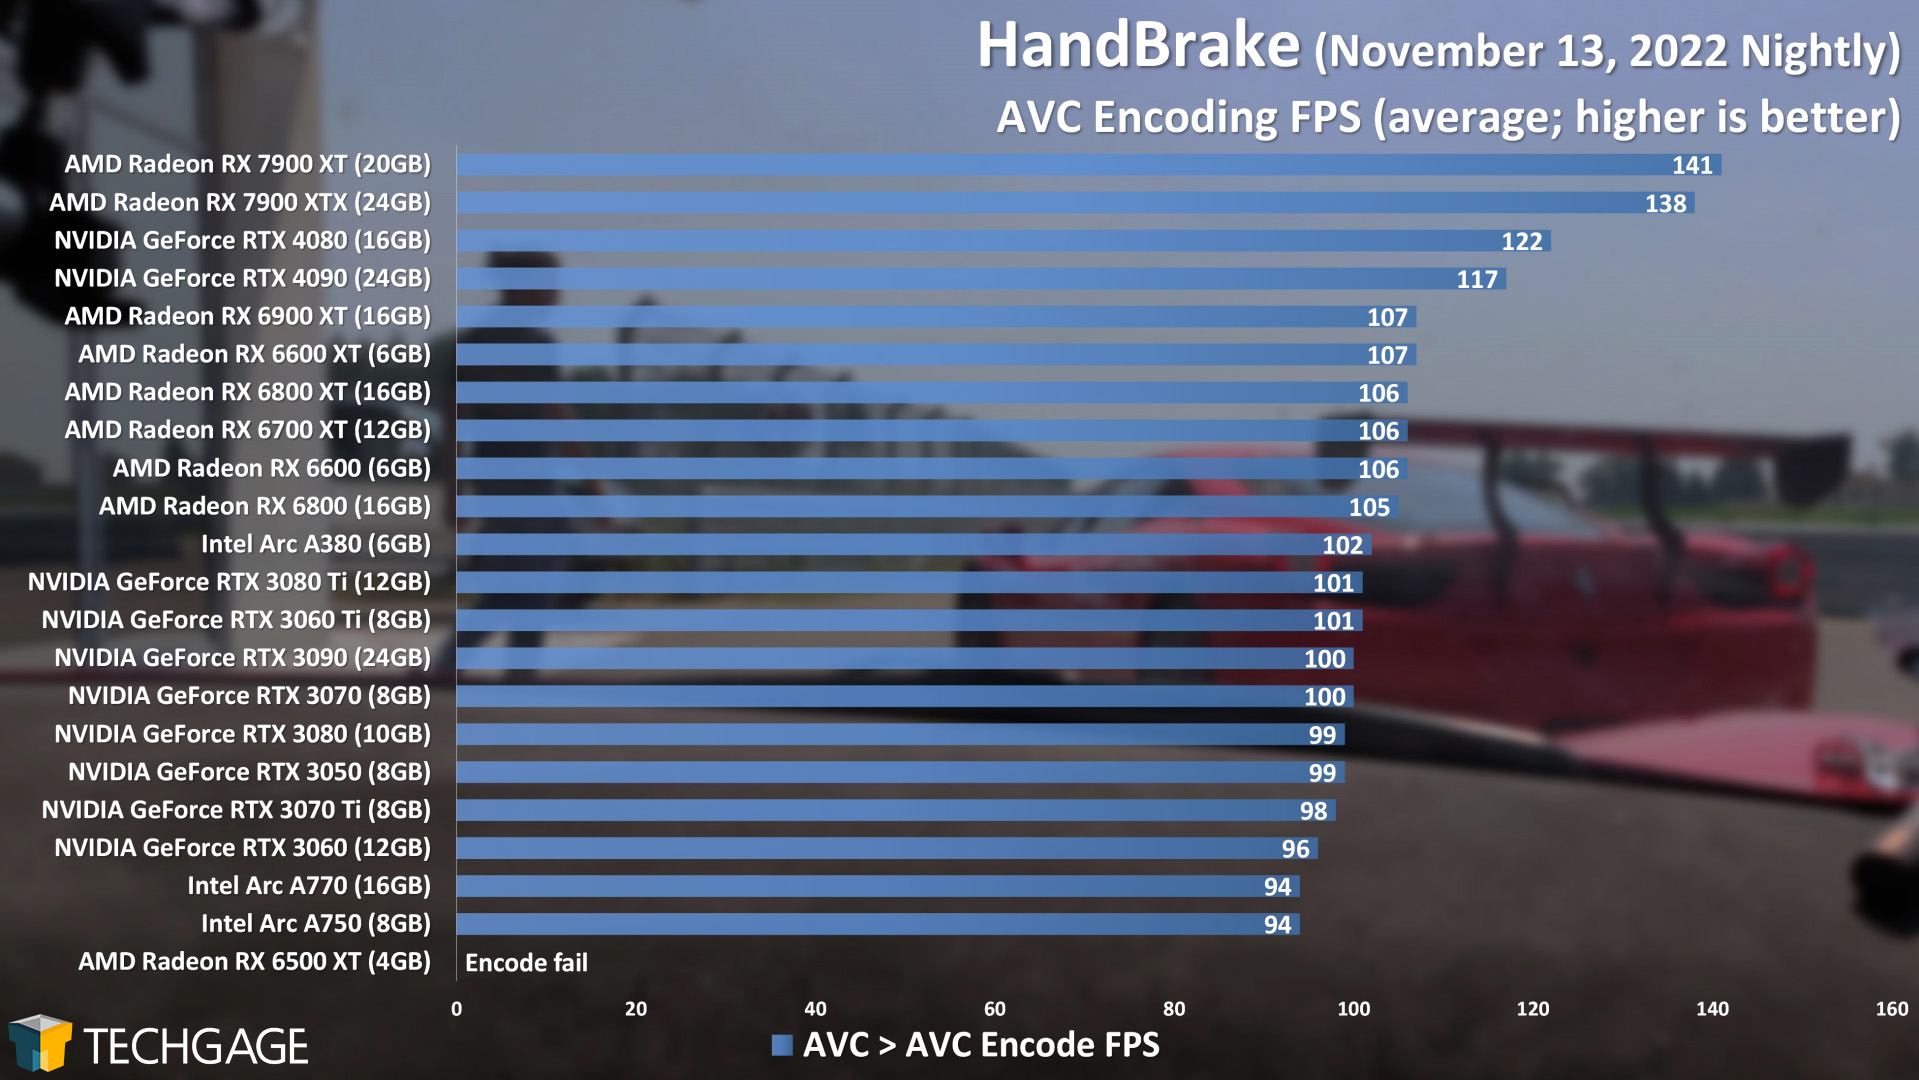 HandBrake AVC Encode Performance (AMD Radeon RX 7900 XT and XTX)